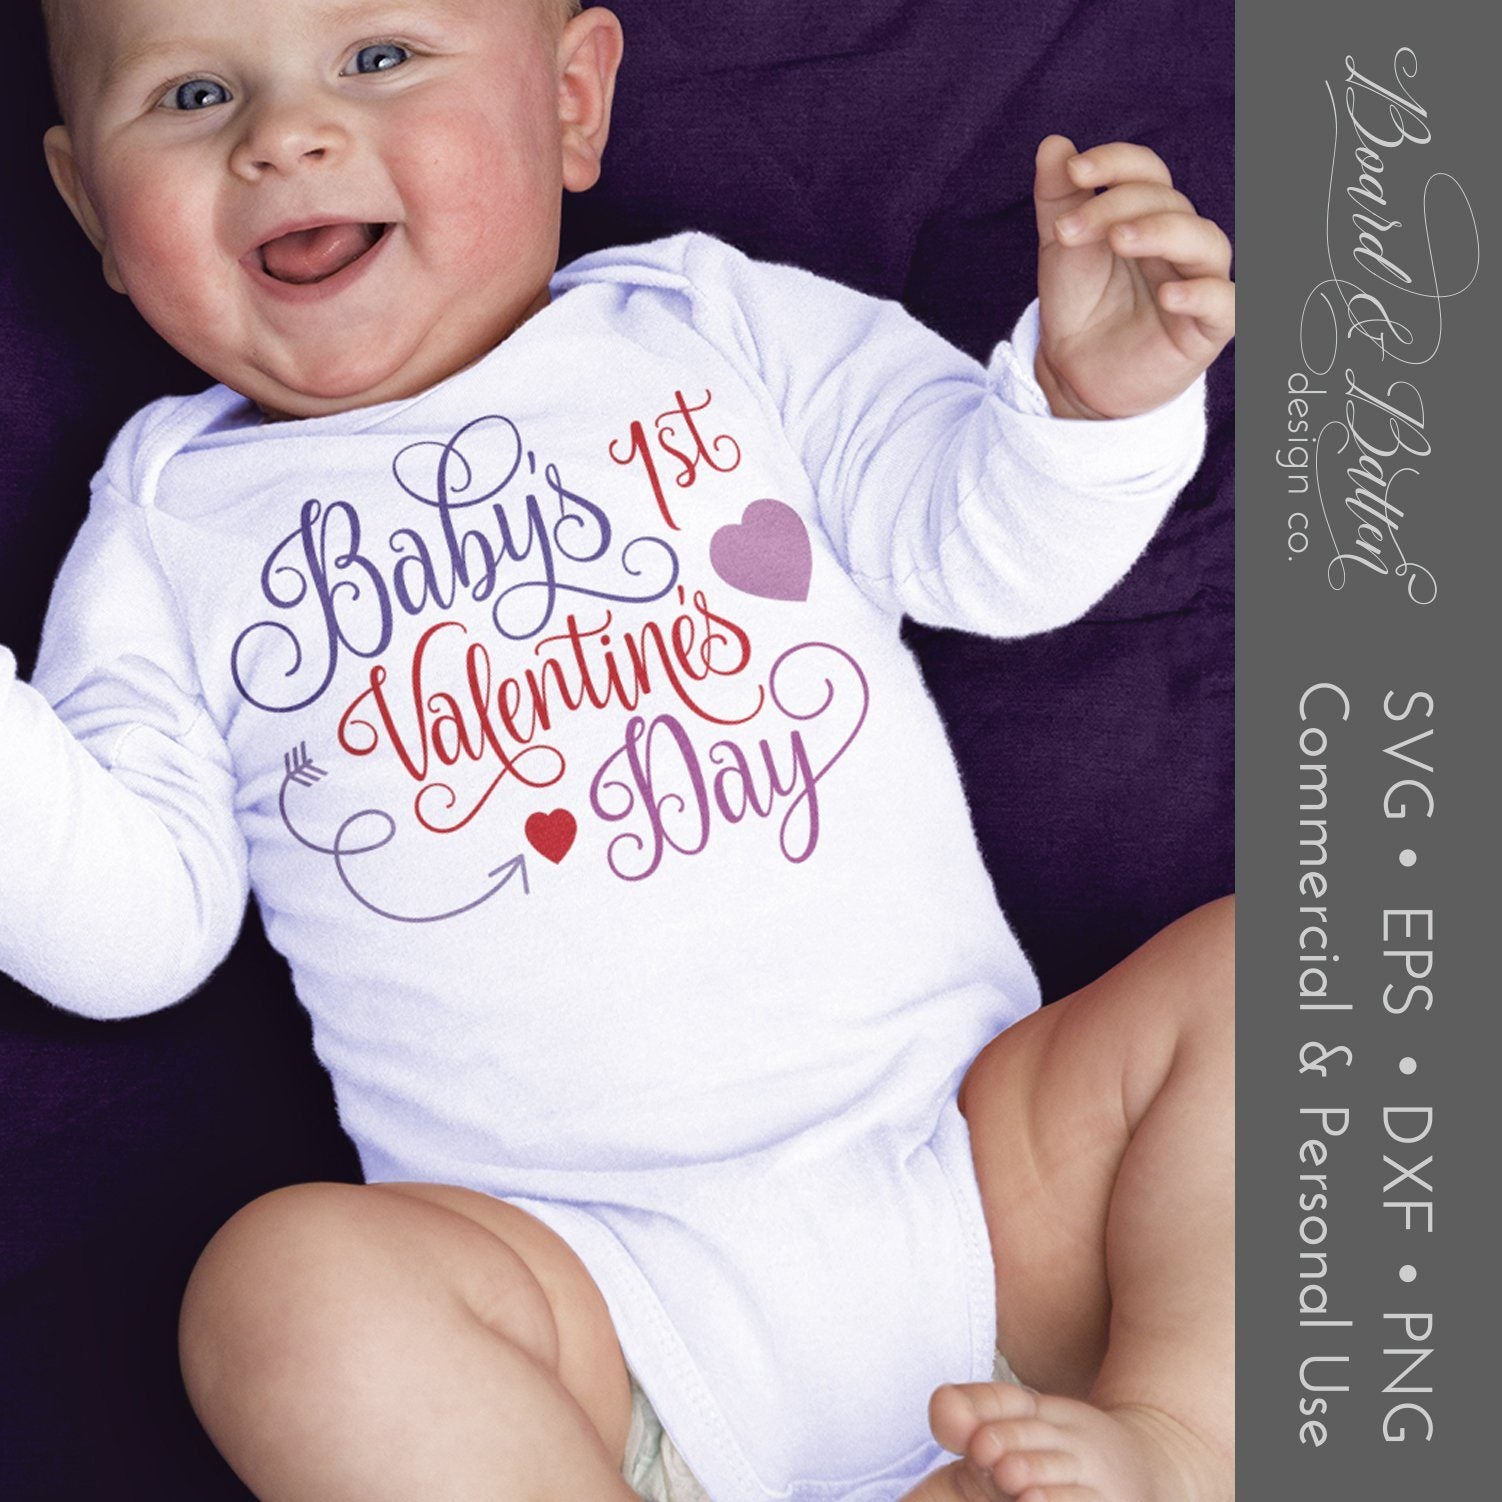 Download Baby S First Valentine S Day Svg Board Batten Design Co